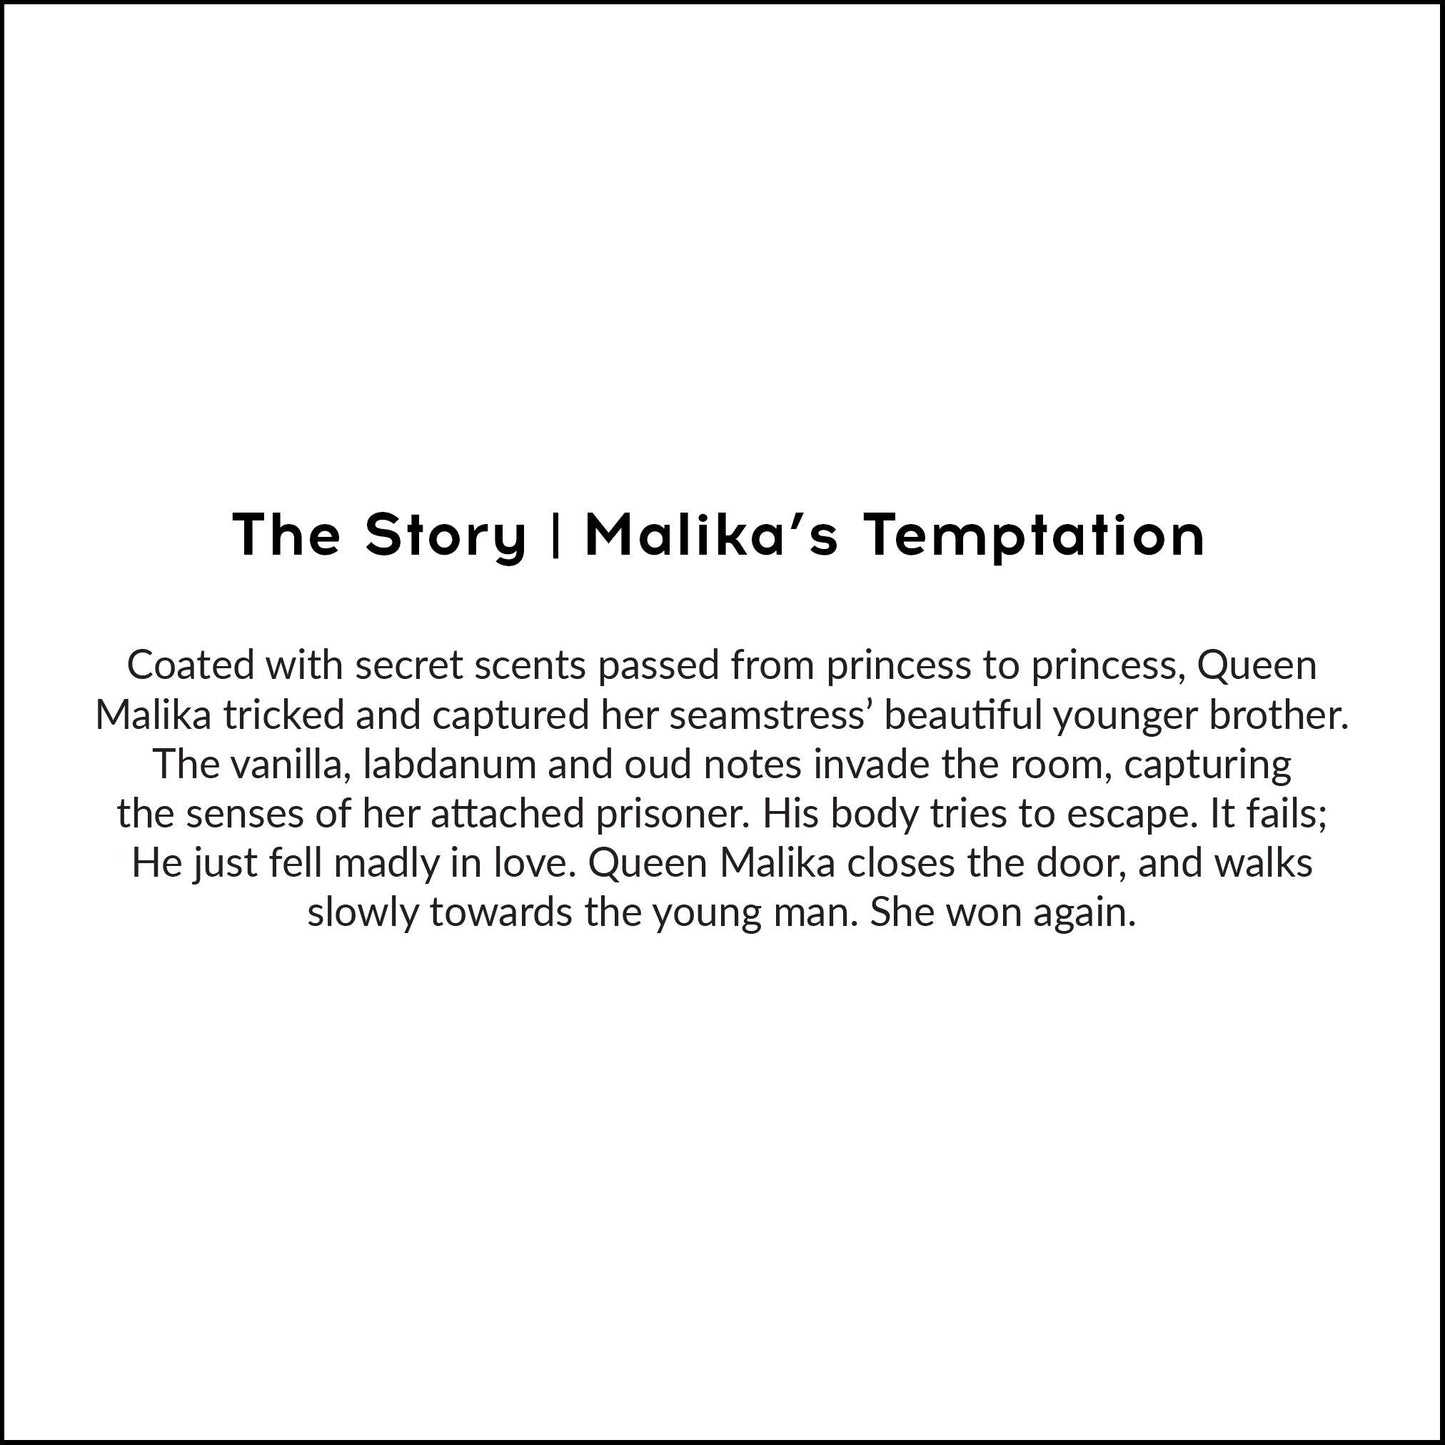 MALIKA'S TEMPTATION - SCENT BEAUTY